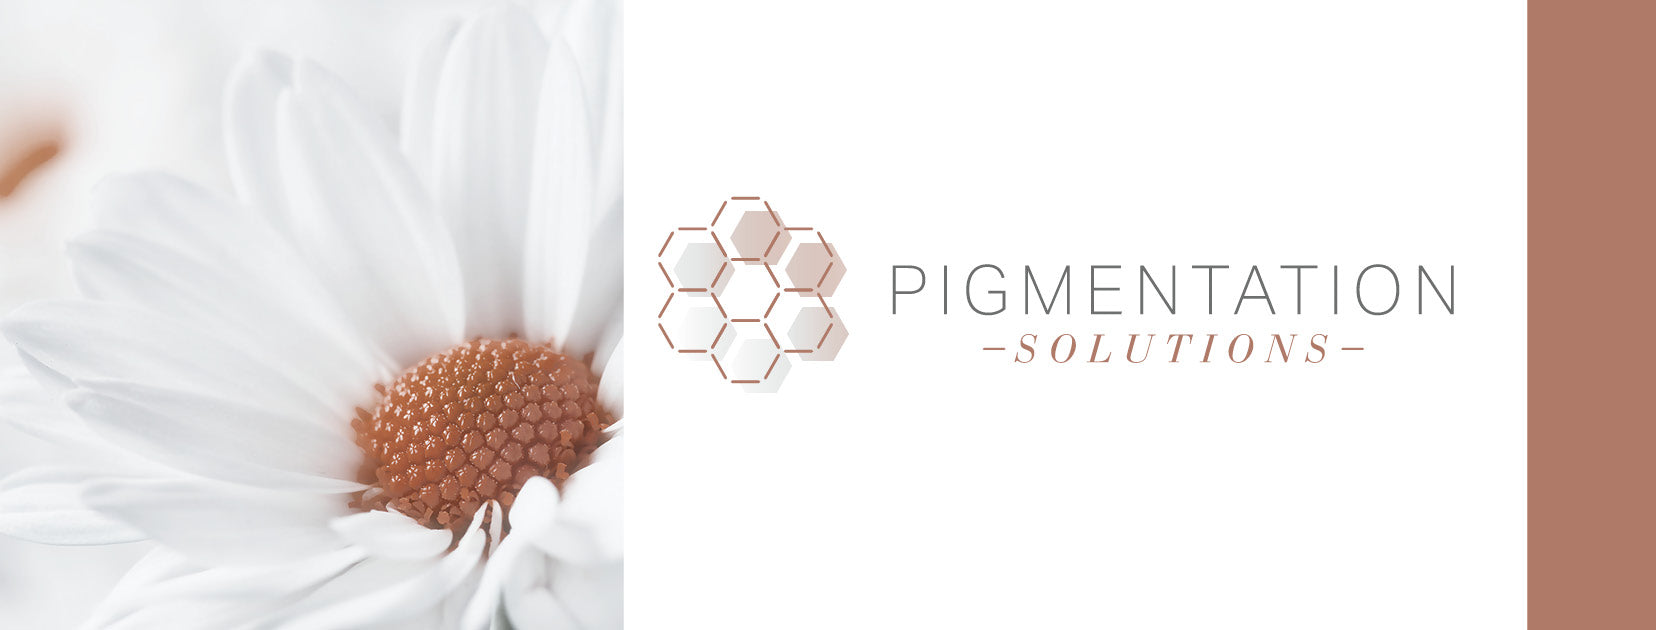 Pigmentation Solutions - Building & Strengthening